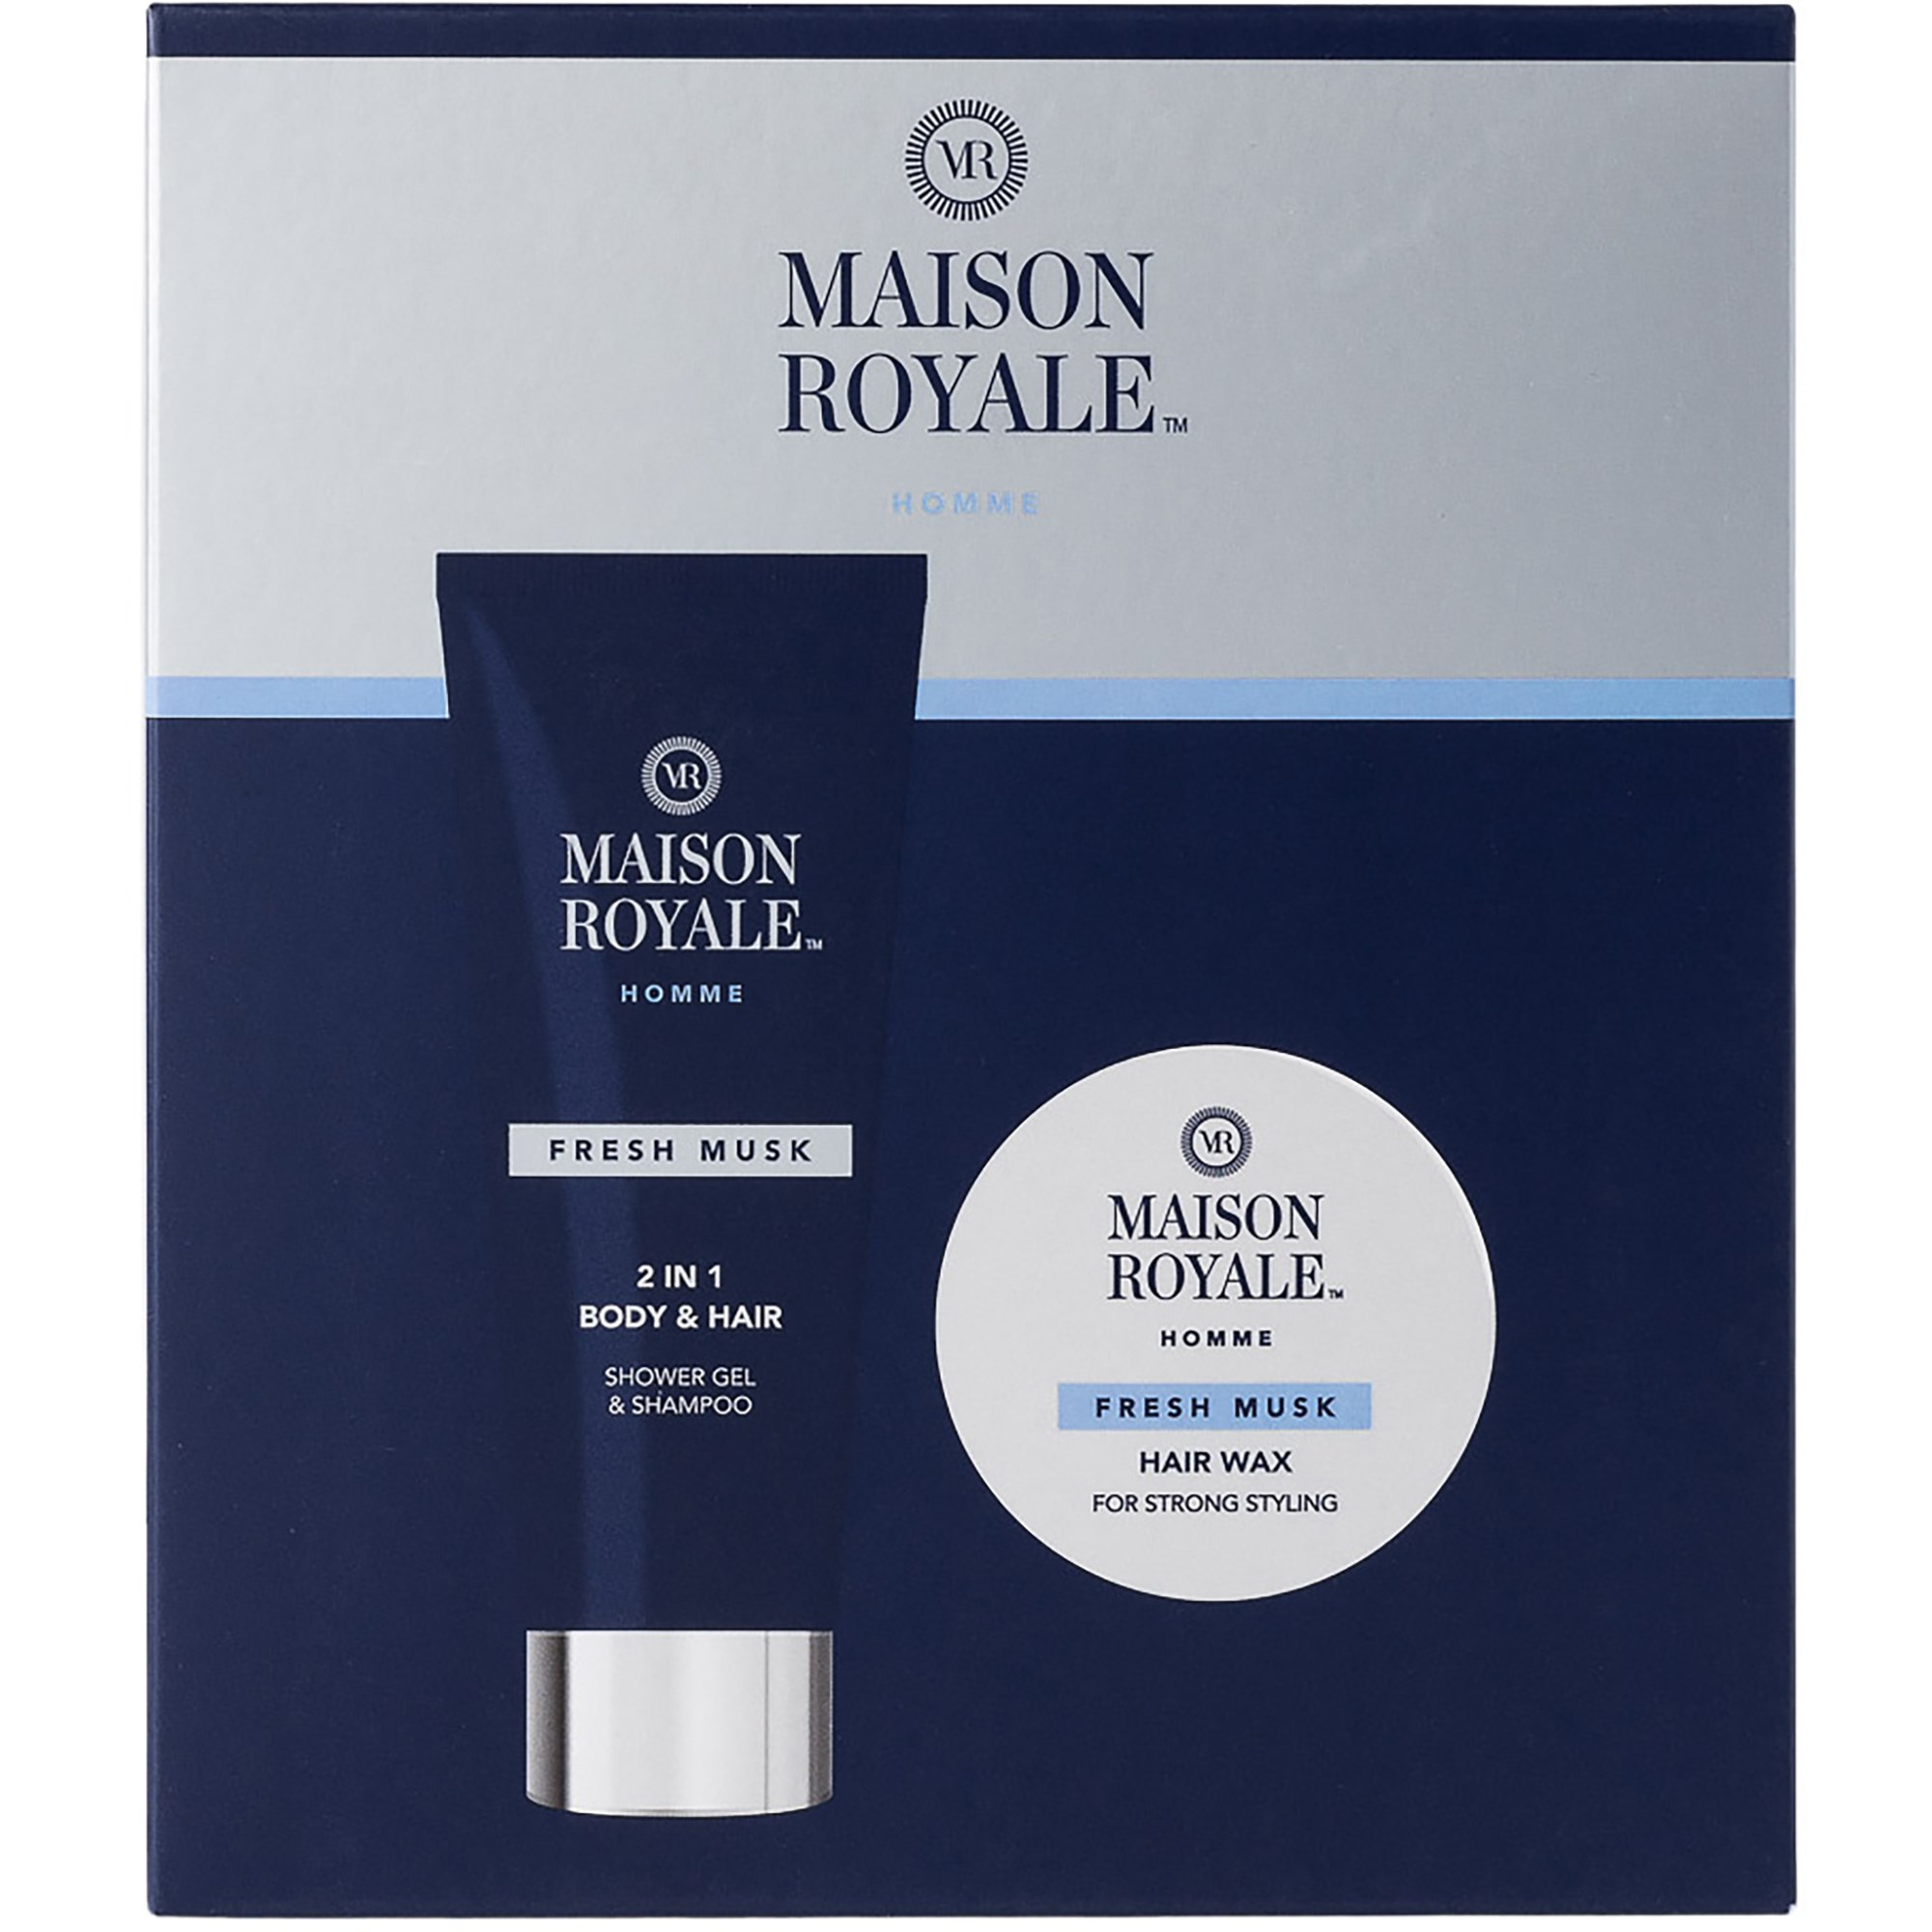 No Brand Maison Royale Body & Hair Set